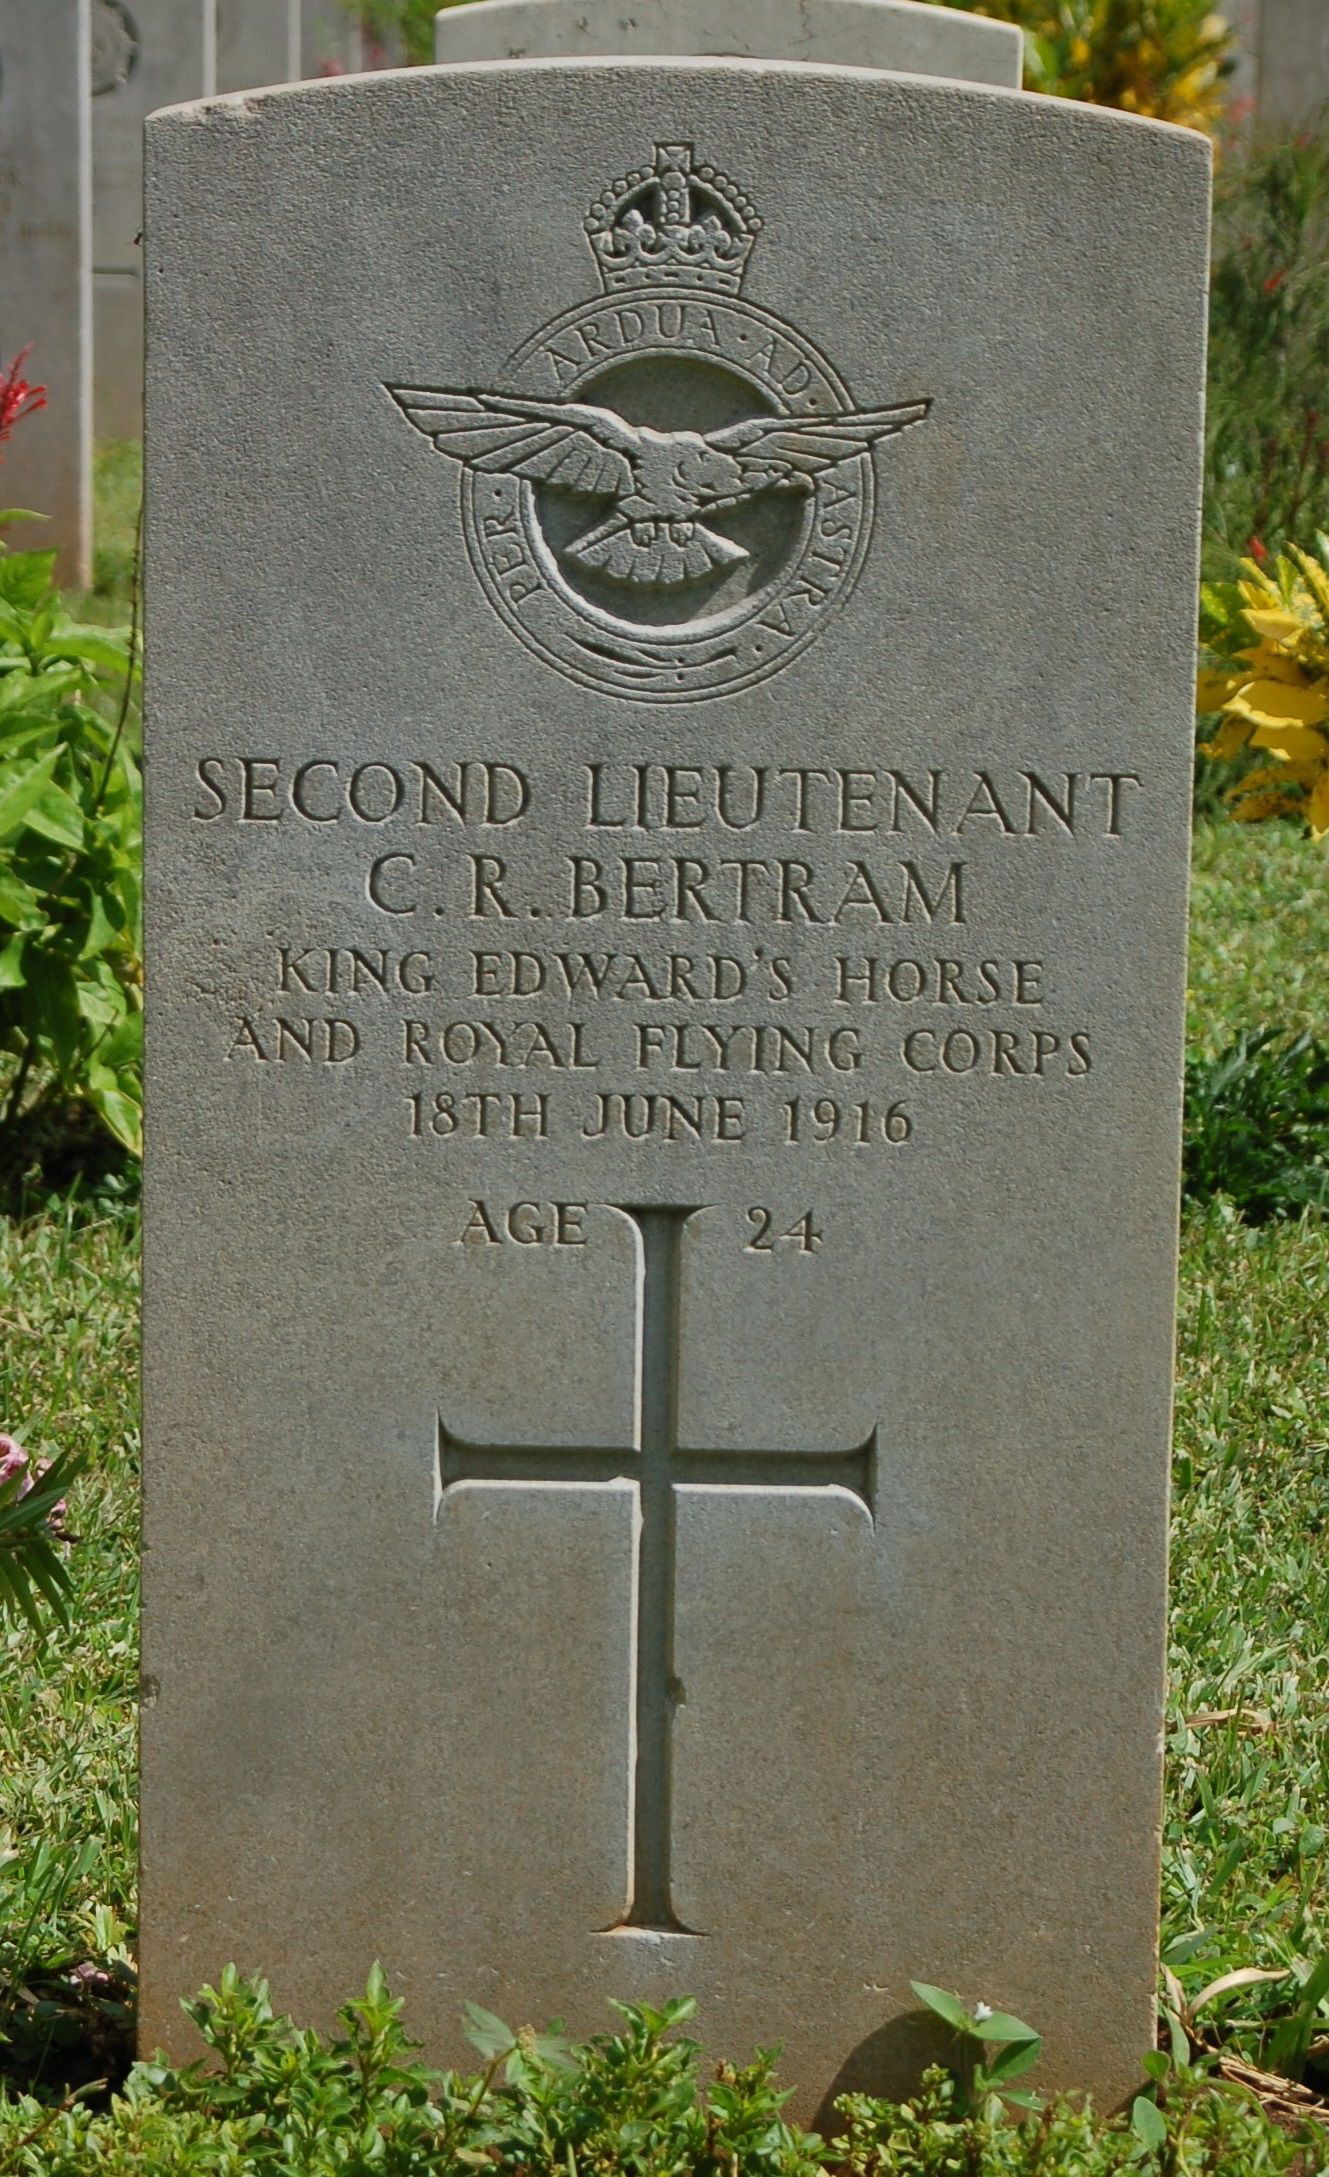 BERTRAM, Cyril Robertson. Second Lieutenant, KEH later Royal Flying Corps.